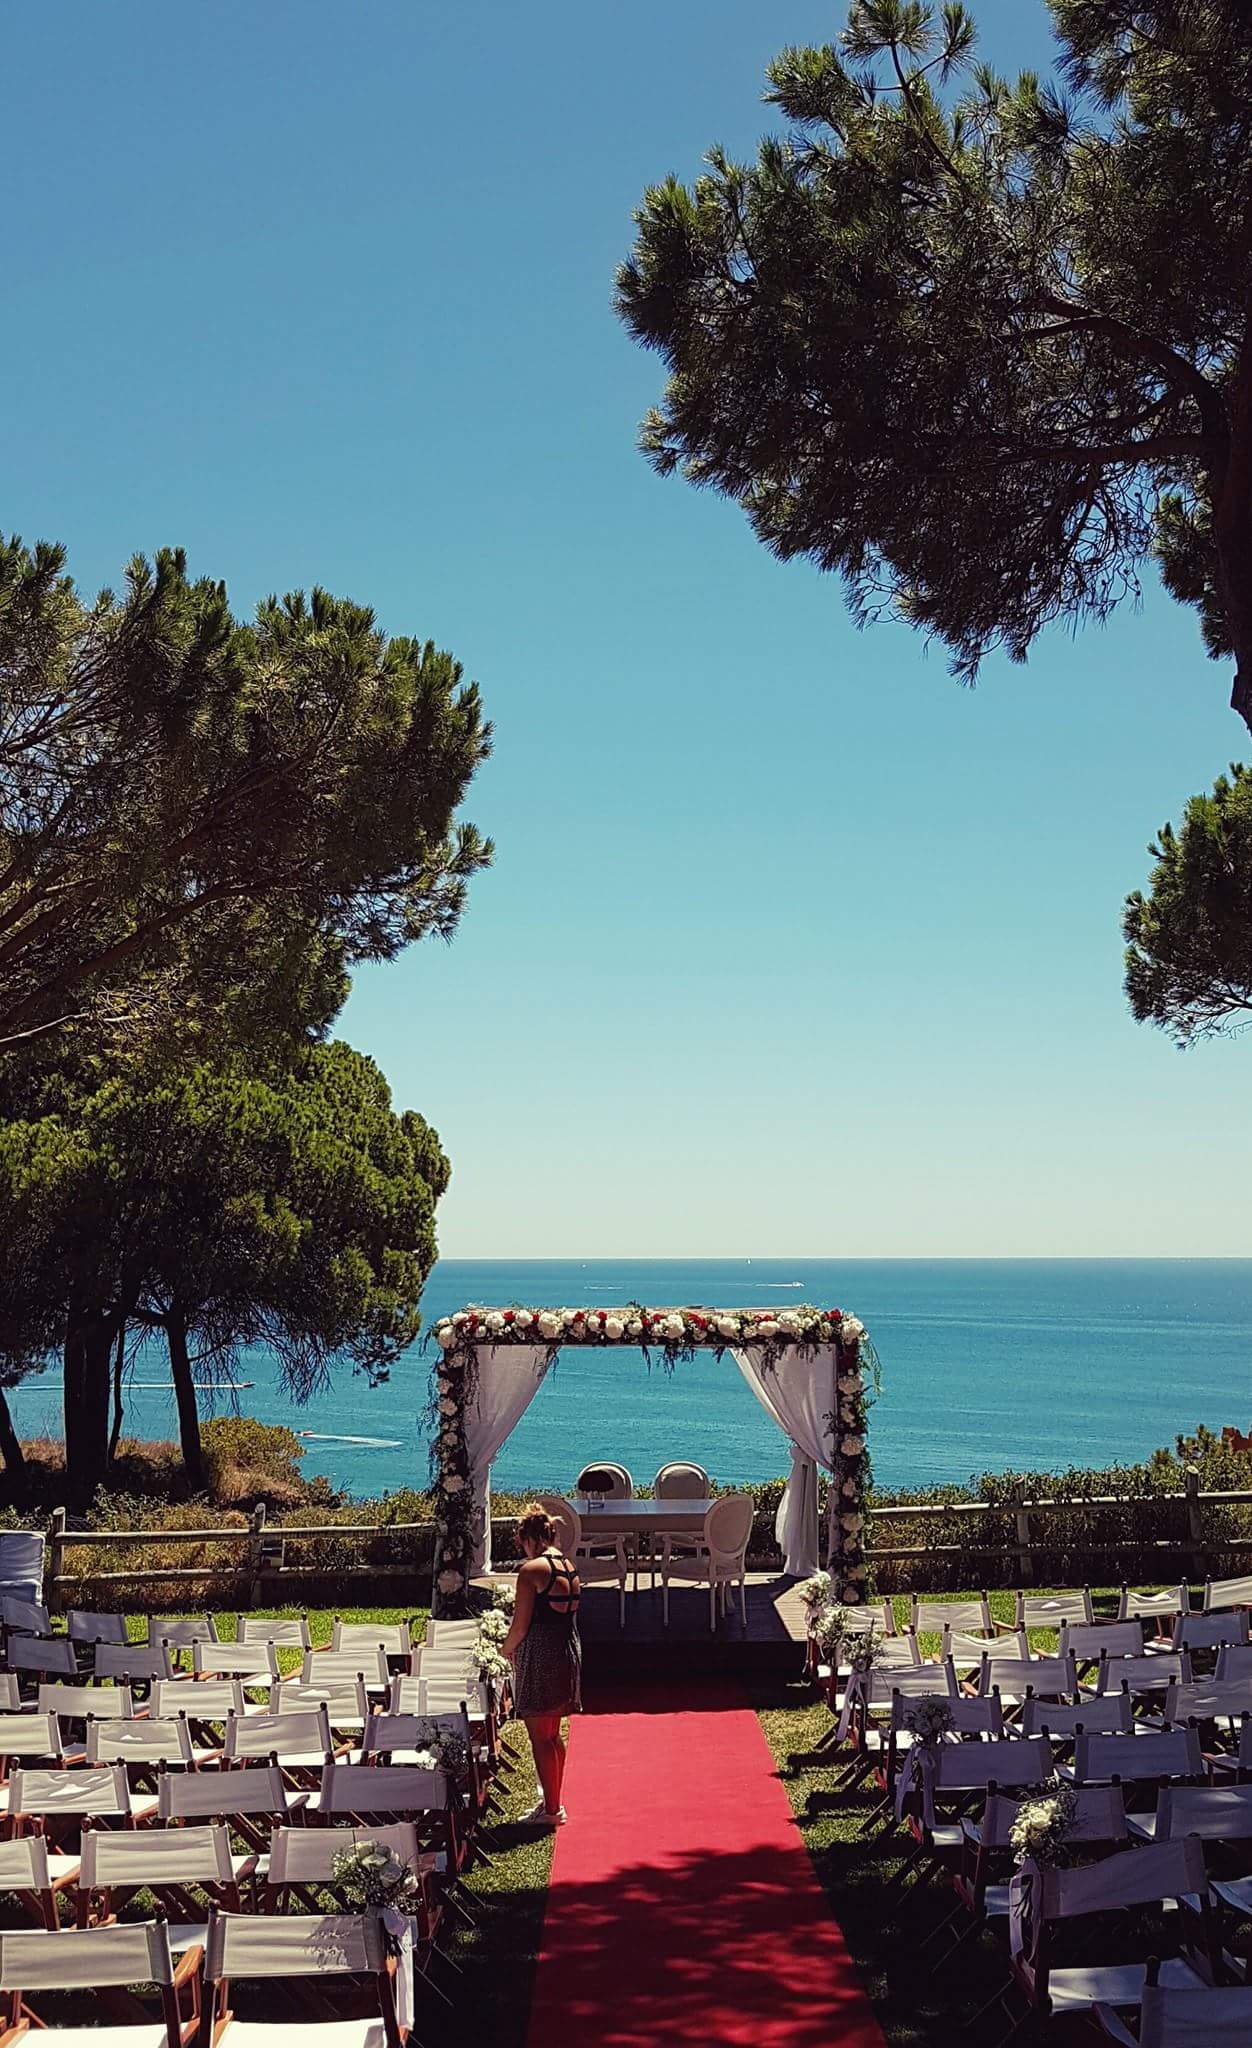 Algarve Wedding Films